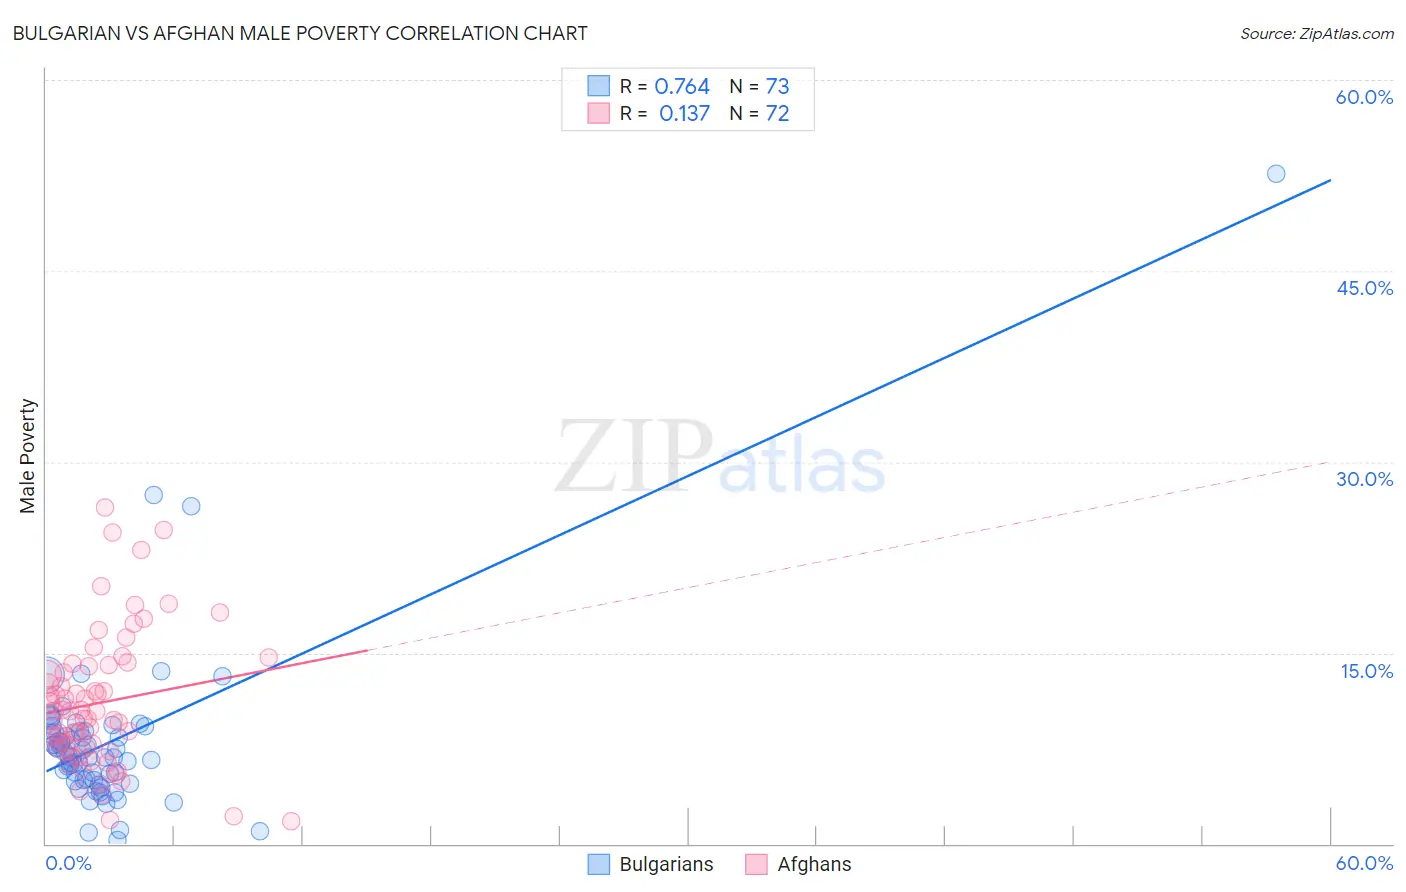 Bulgarian vs Afghan Male Poverty